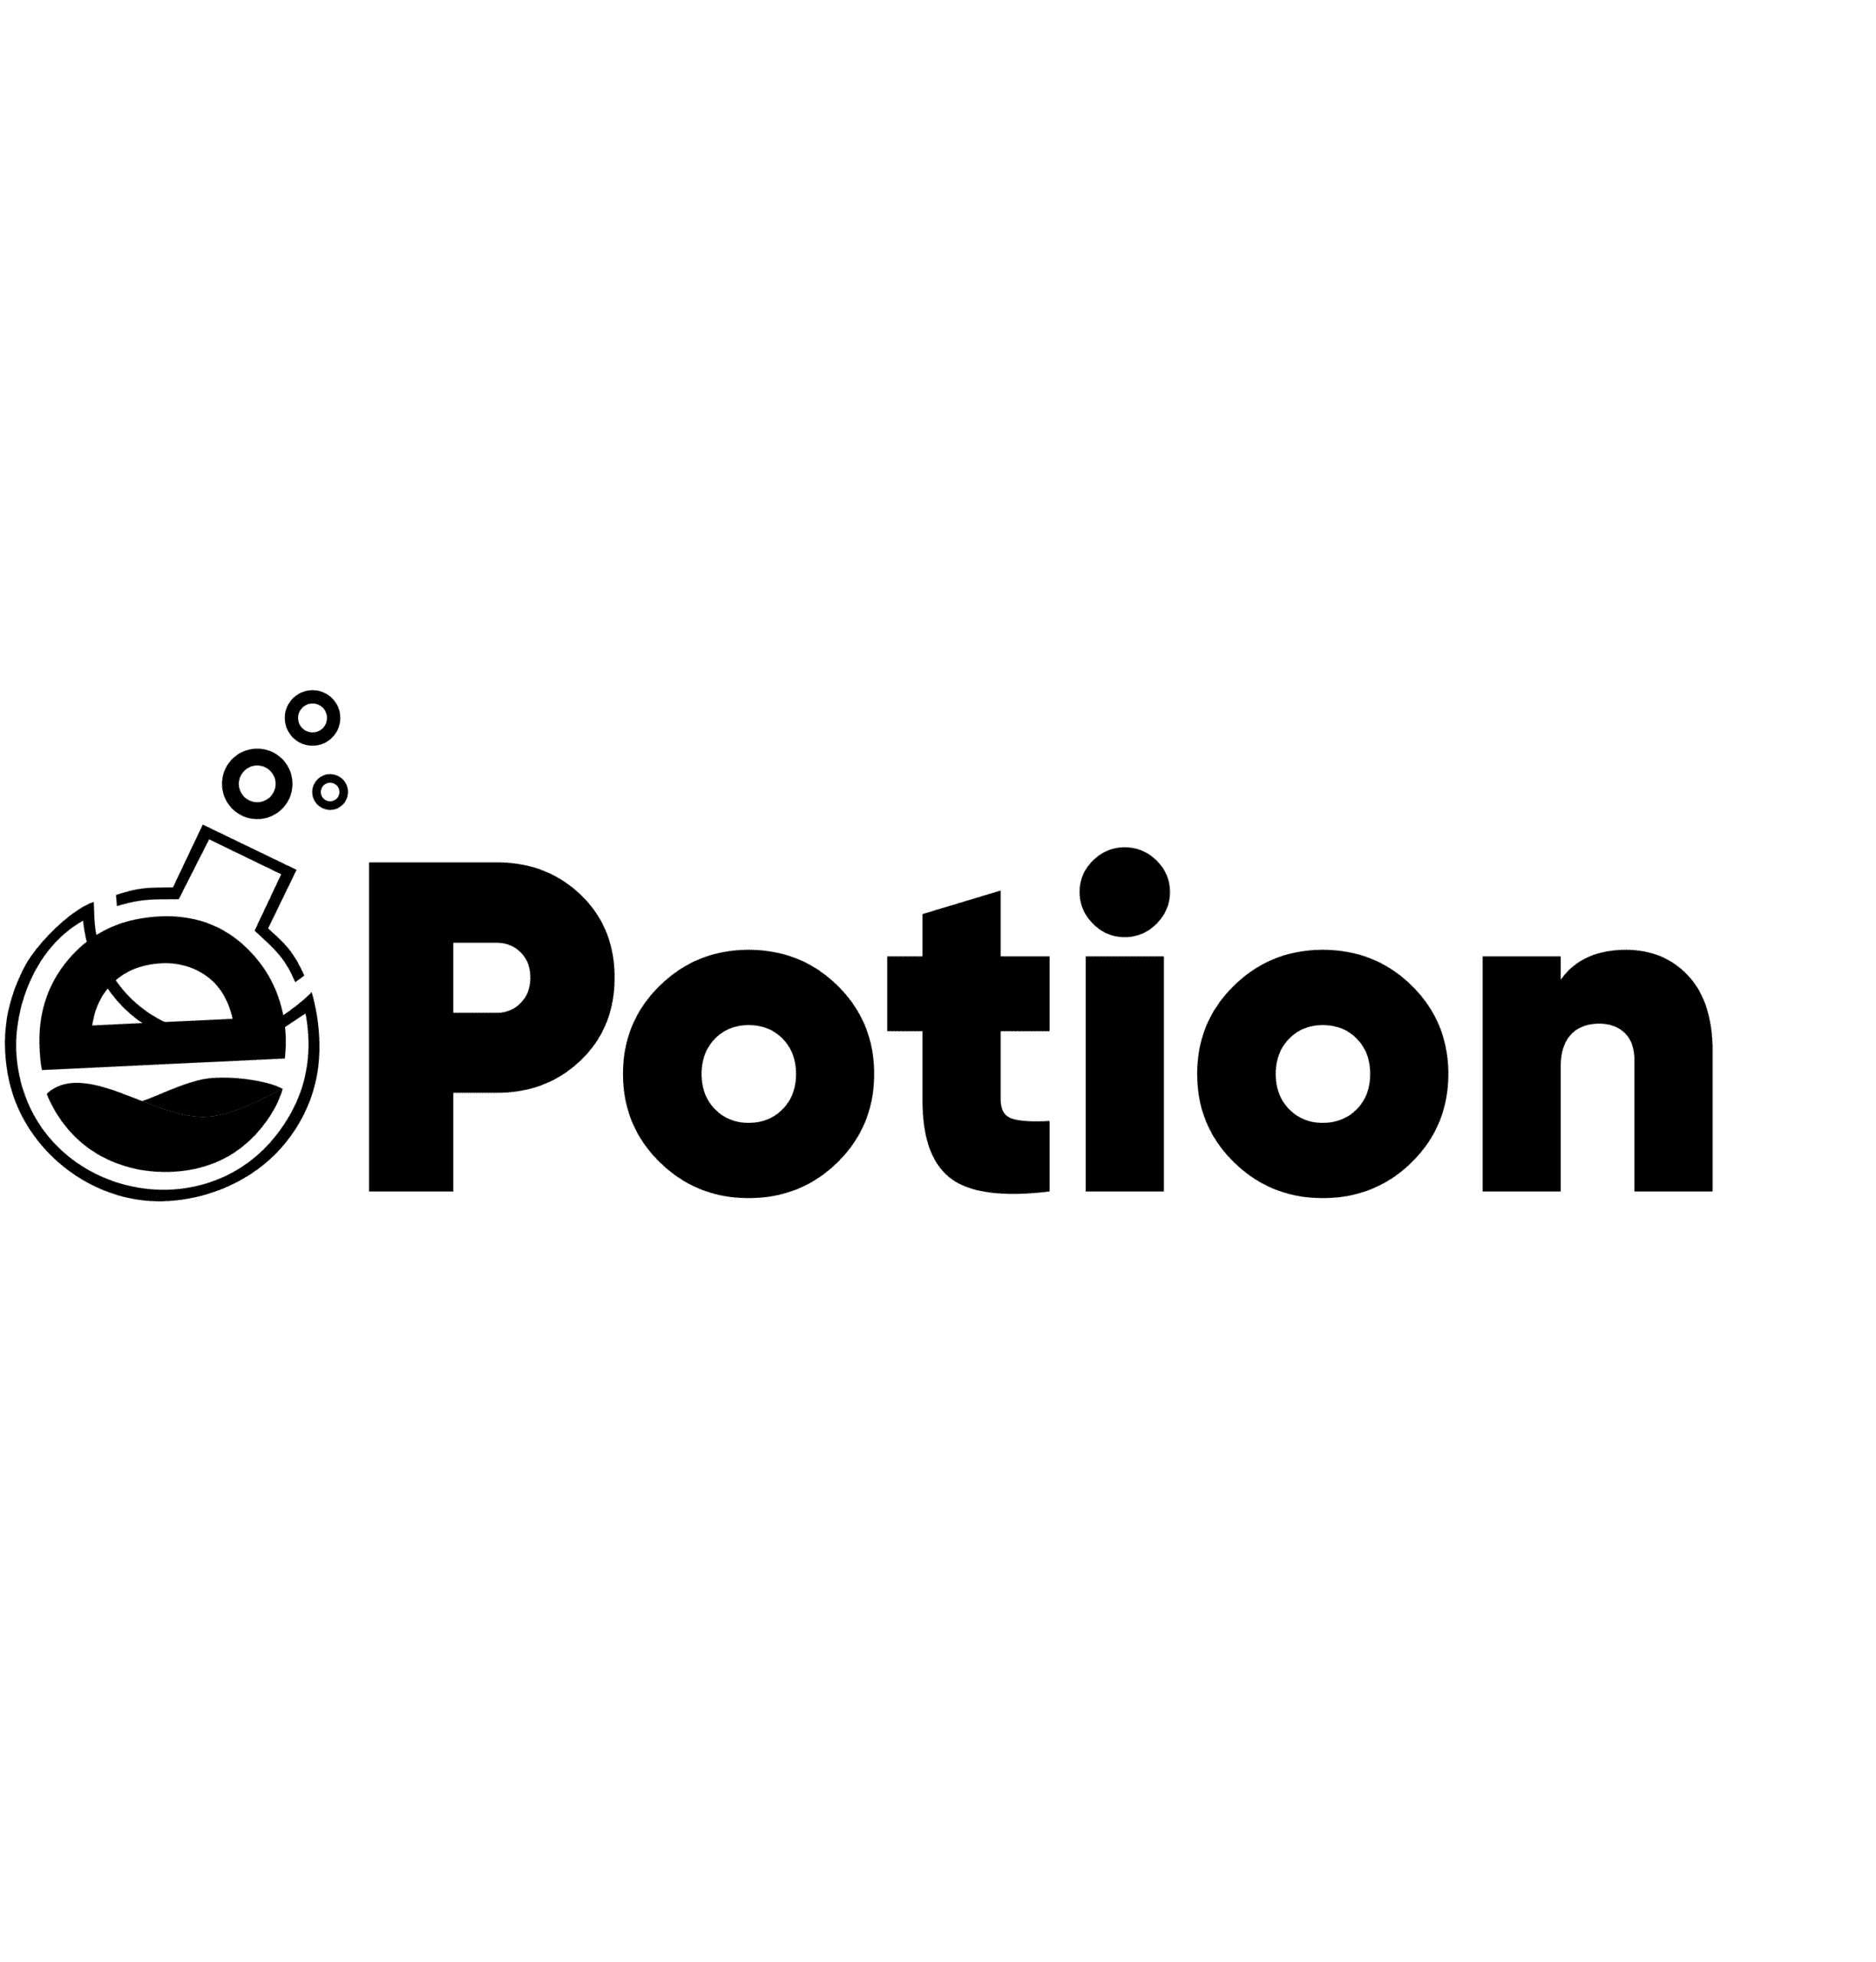 Brand e-Potion